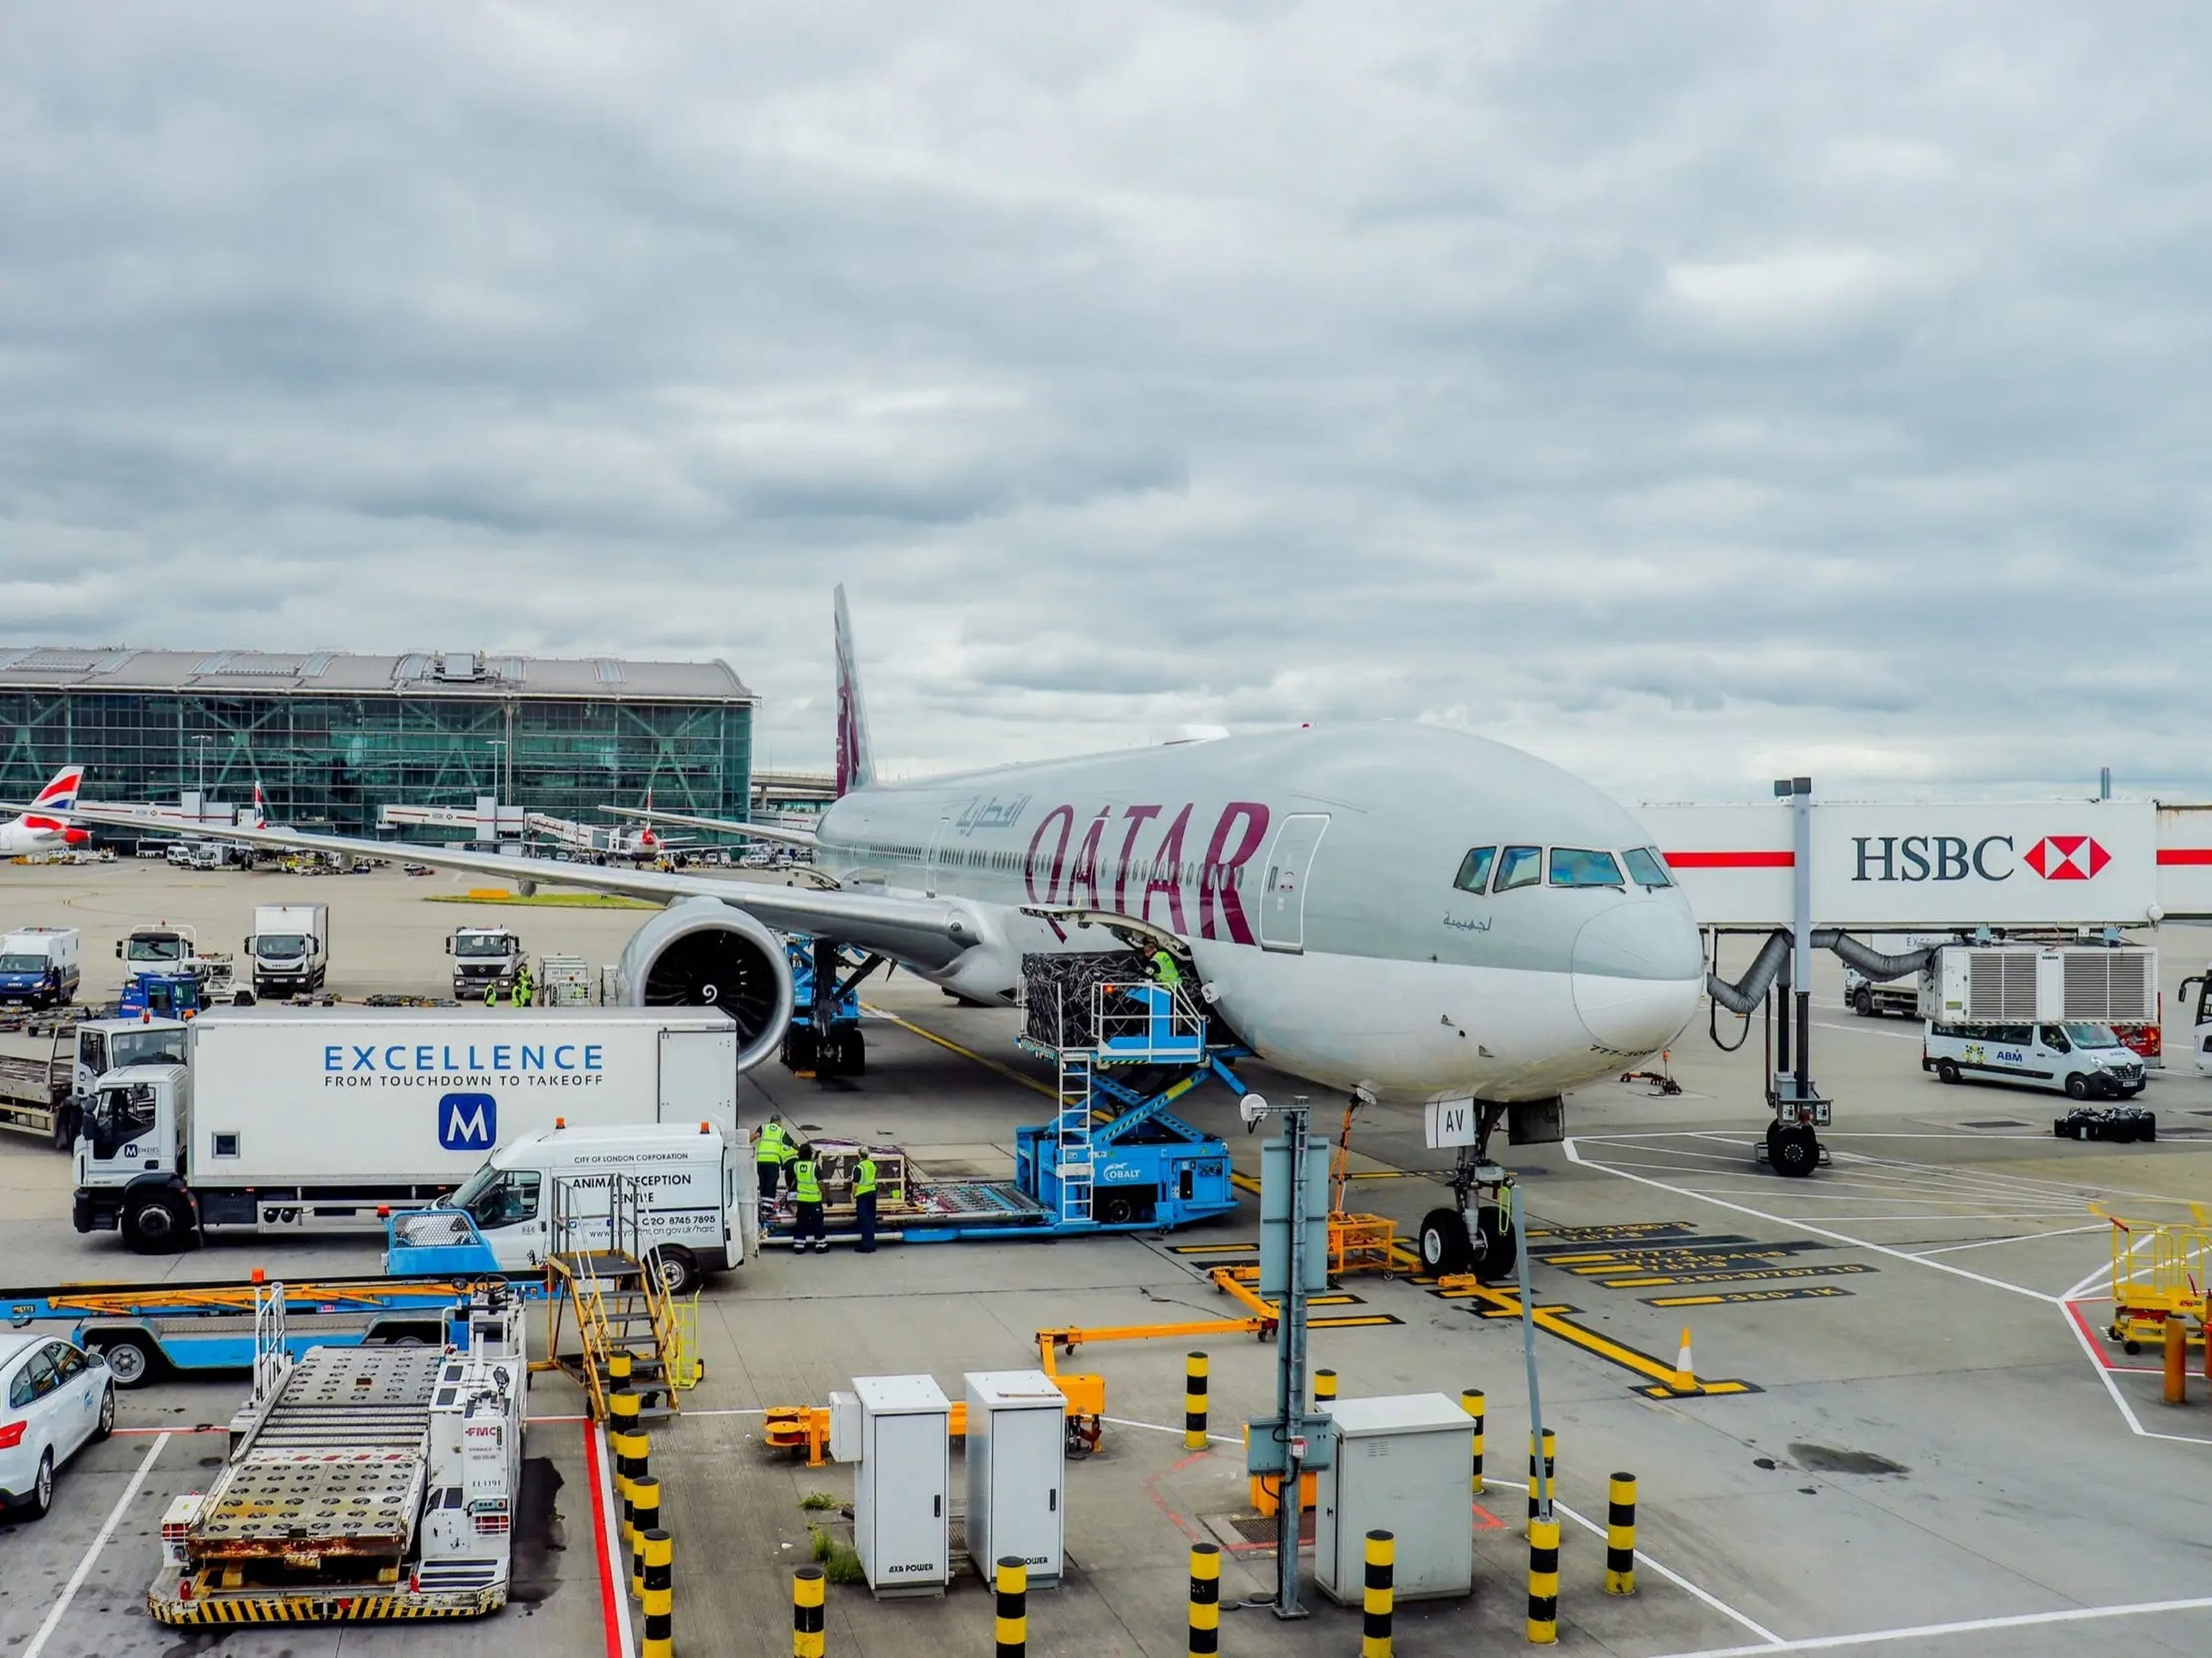 Qatar Airways Flight from Doha, Qatar to London Boeing 777-300ER — Qatar Trip 2021